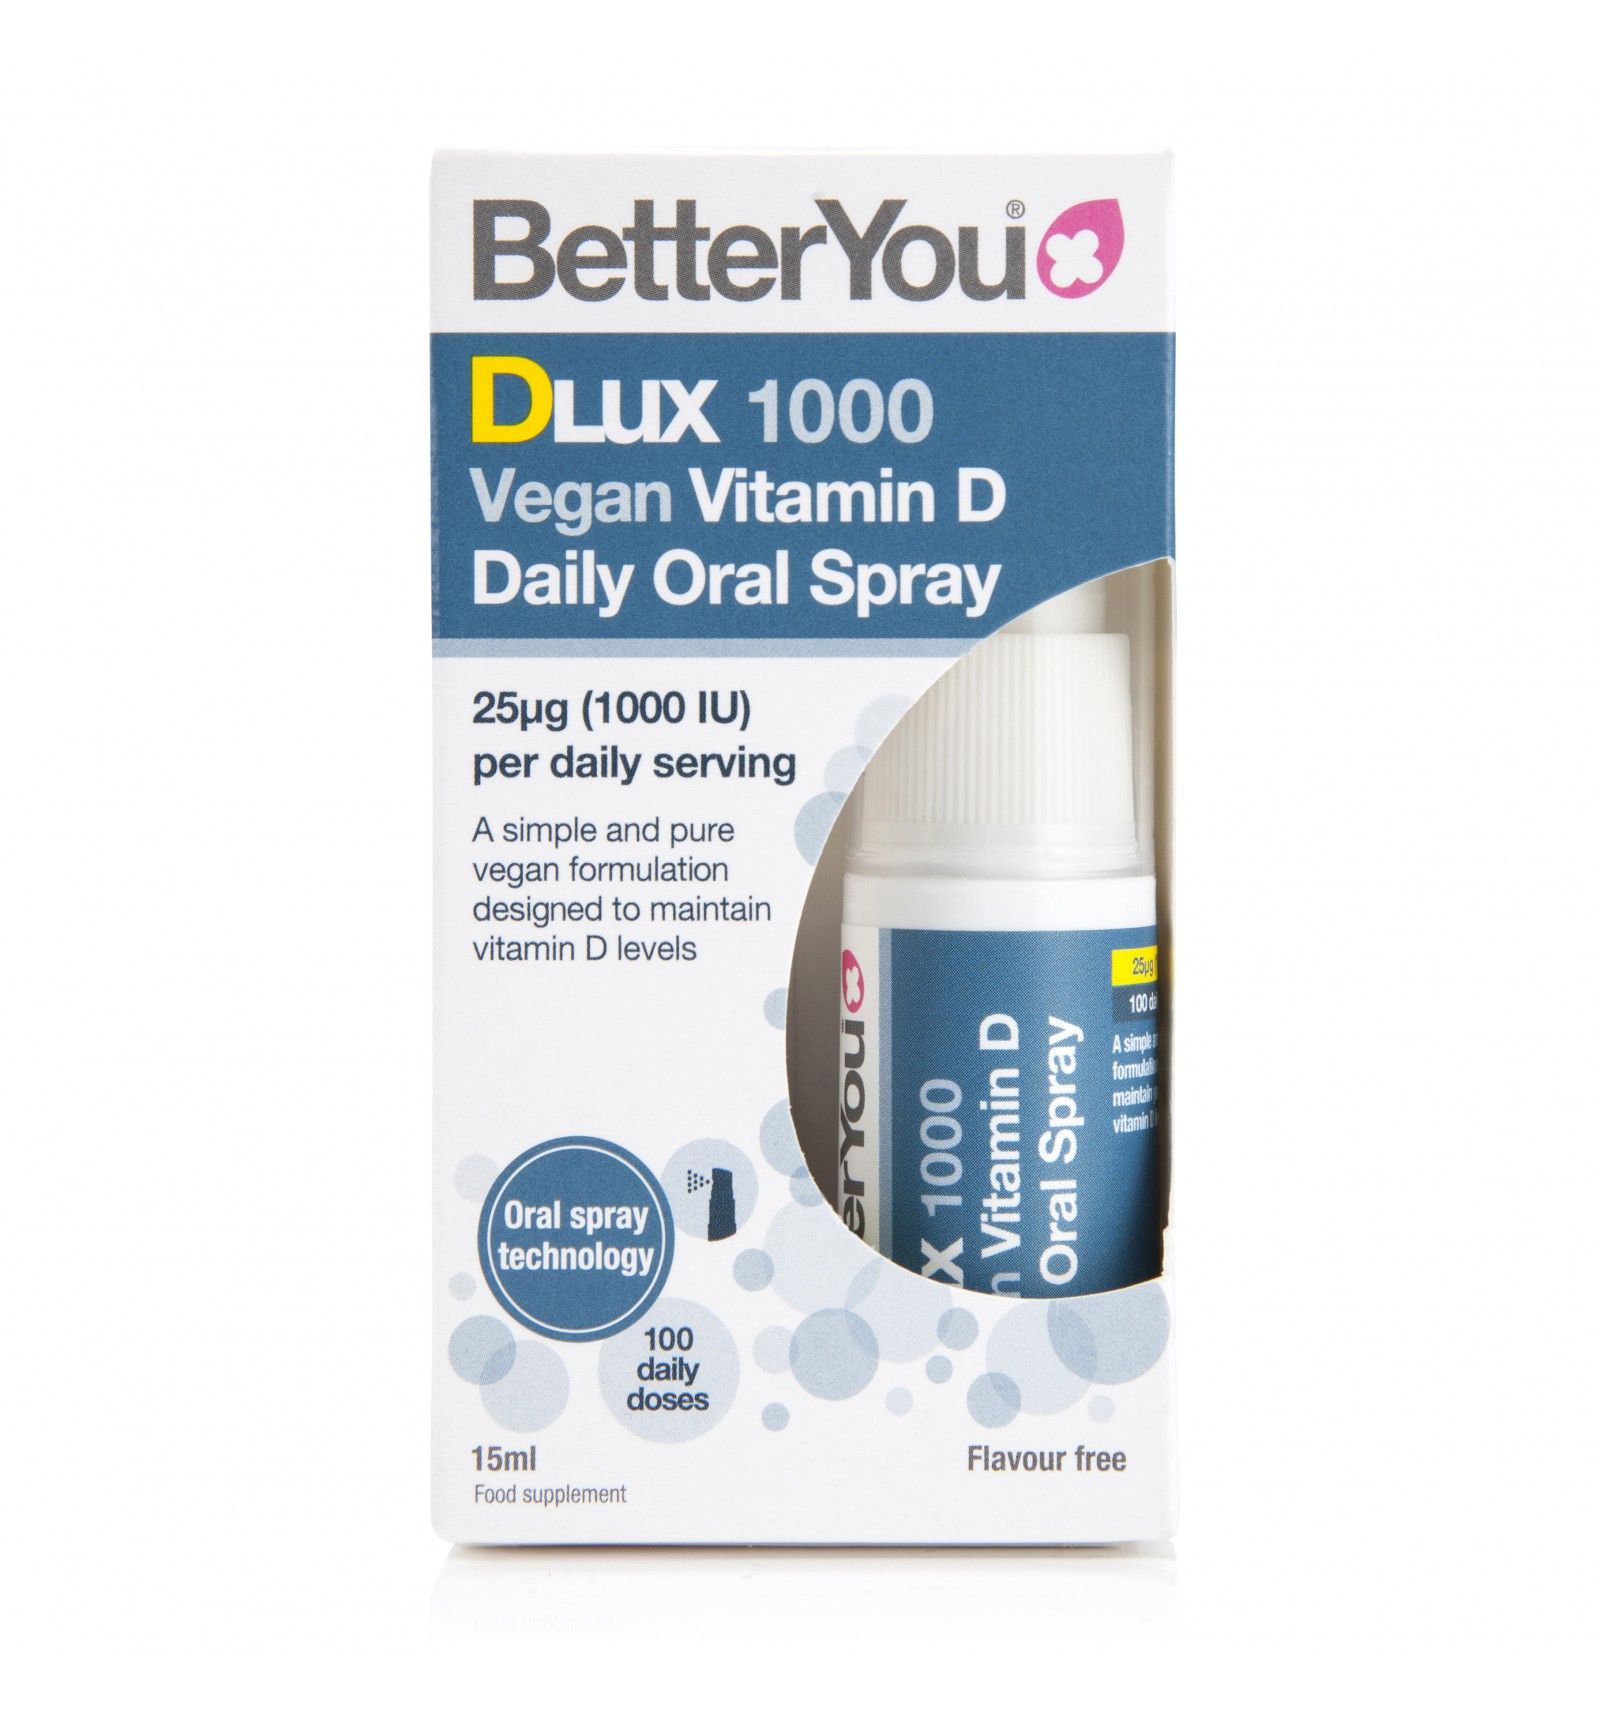 BetterYou Natural DLux 1000 Vegan Vitamin D - 25ml Oral Spray